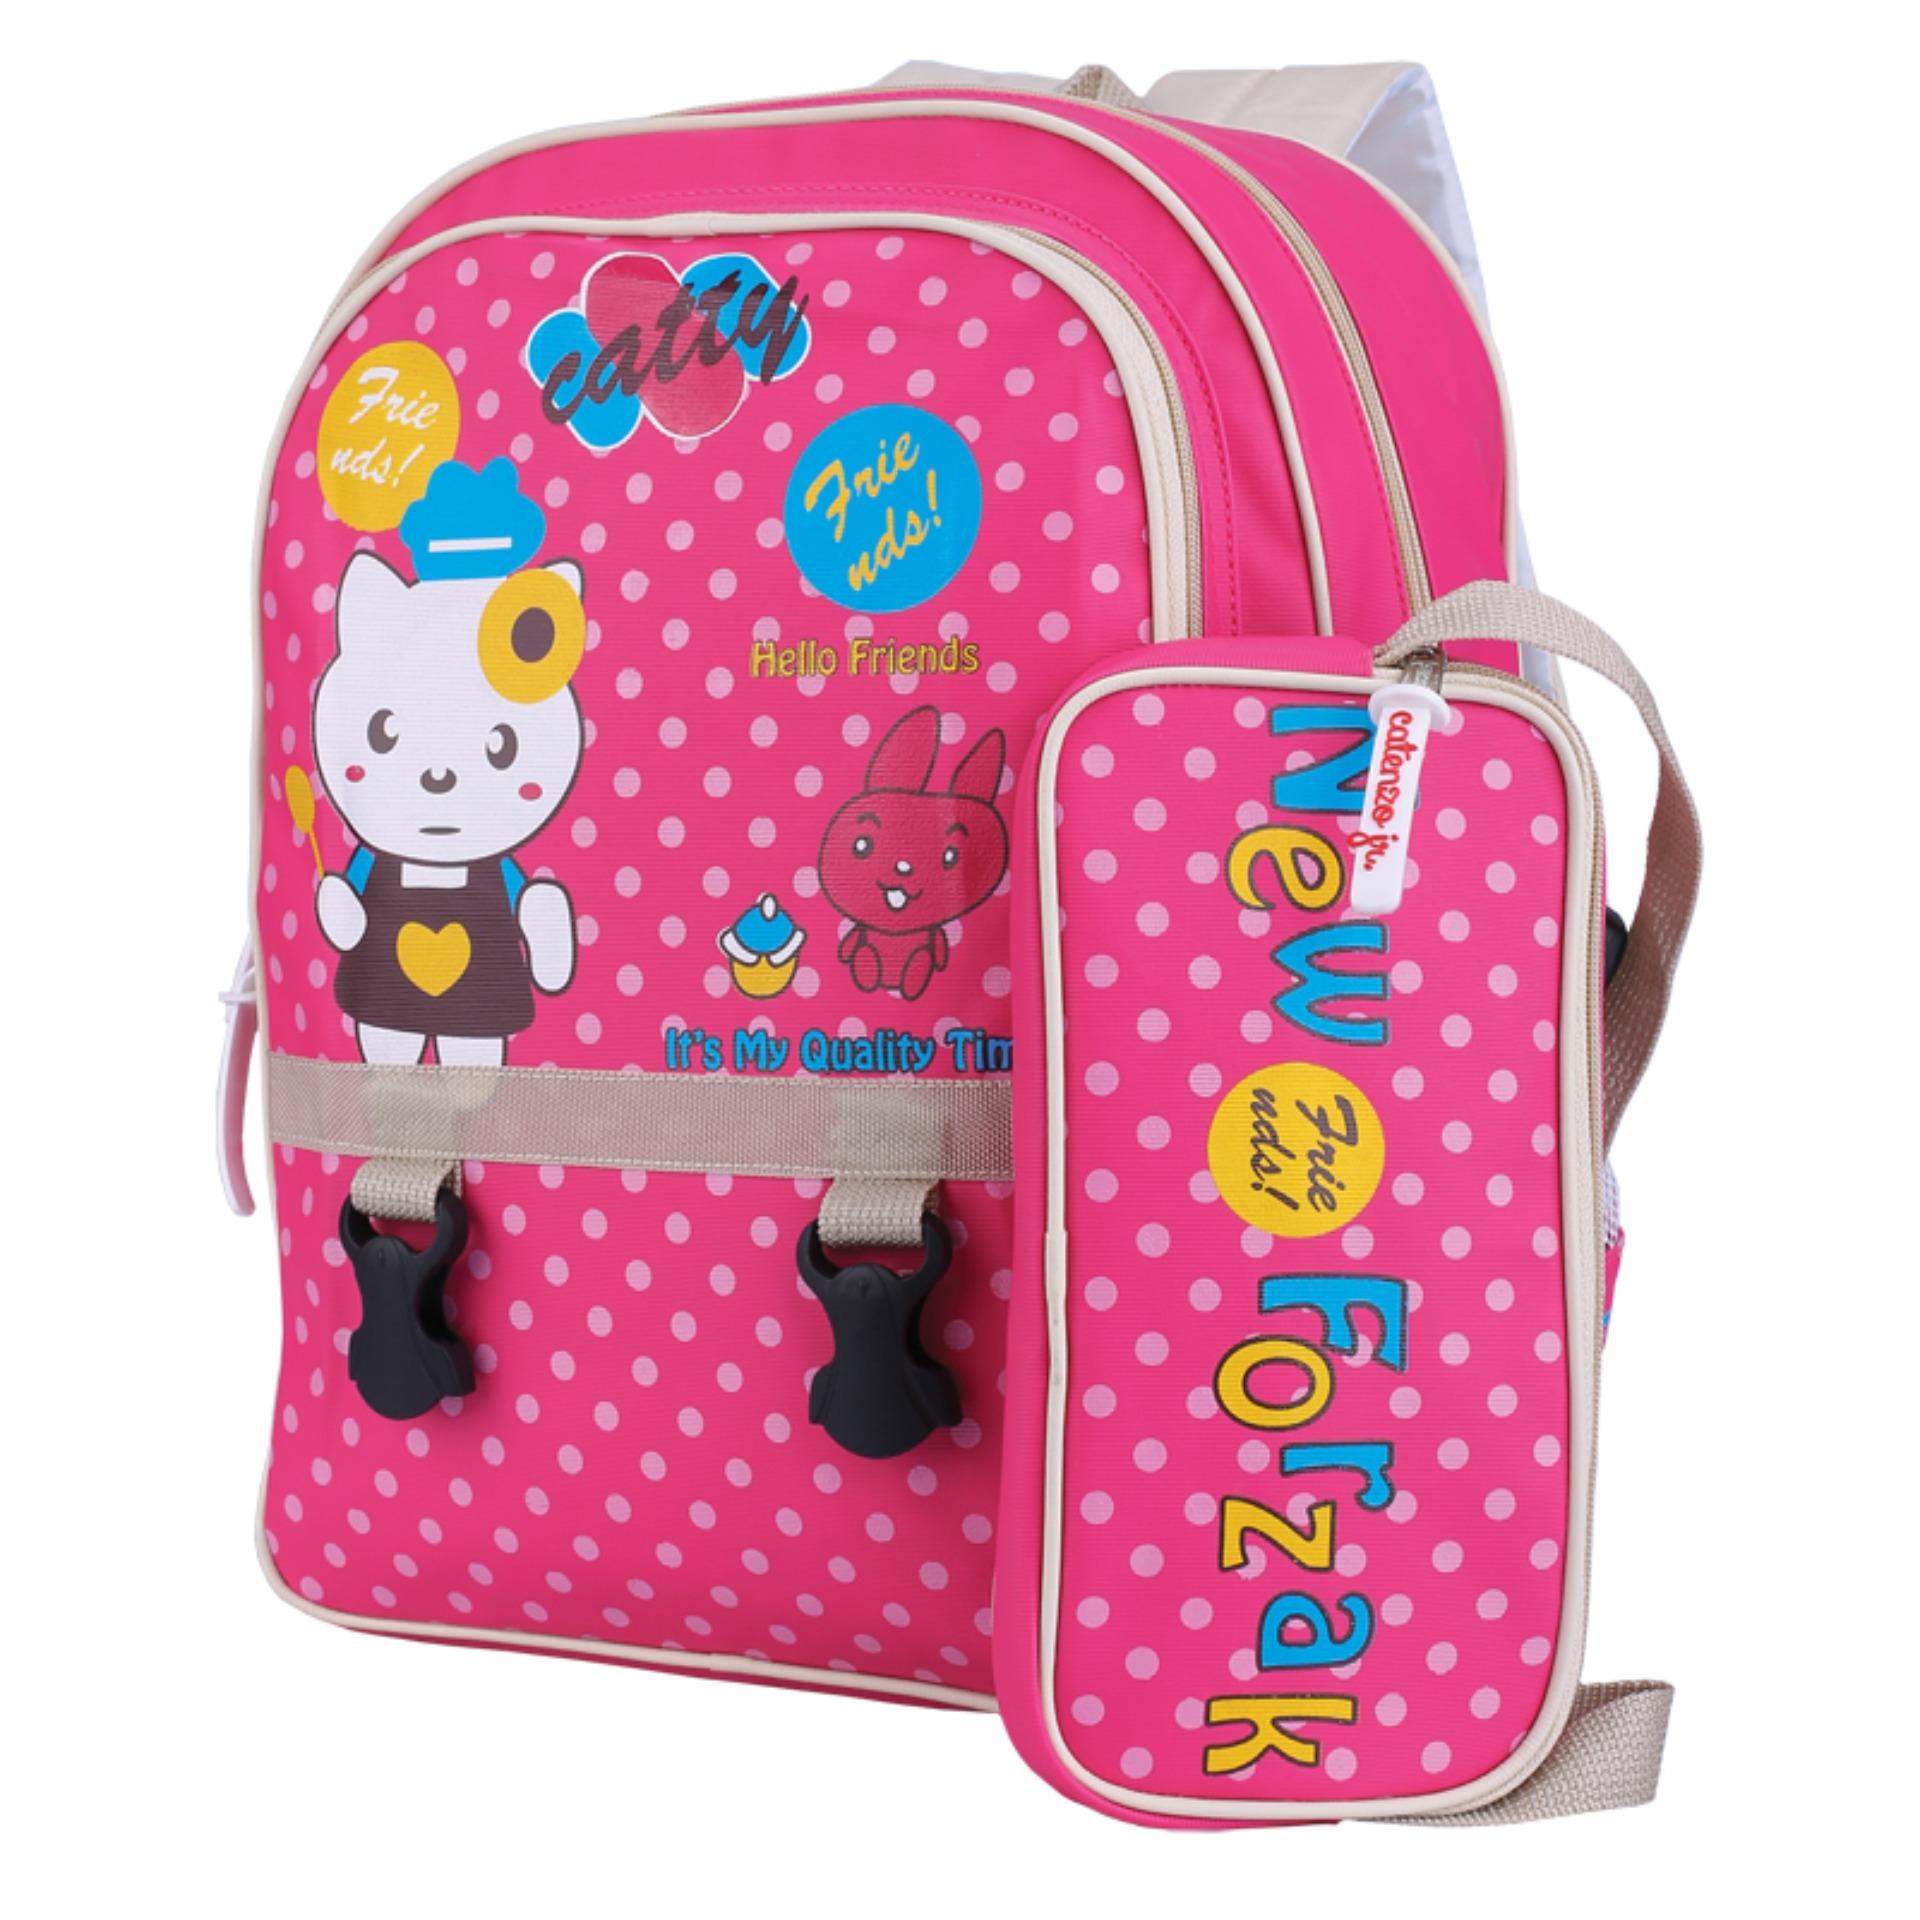 Tas Ransel Anak Perempuan Backpack Casual Sekolah SD Cewek Motif Kitty Polkadot Pink Tempat Pensil Case